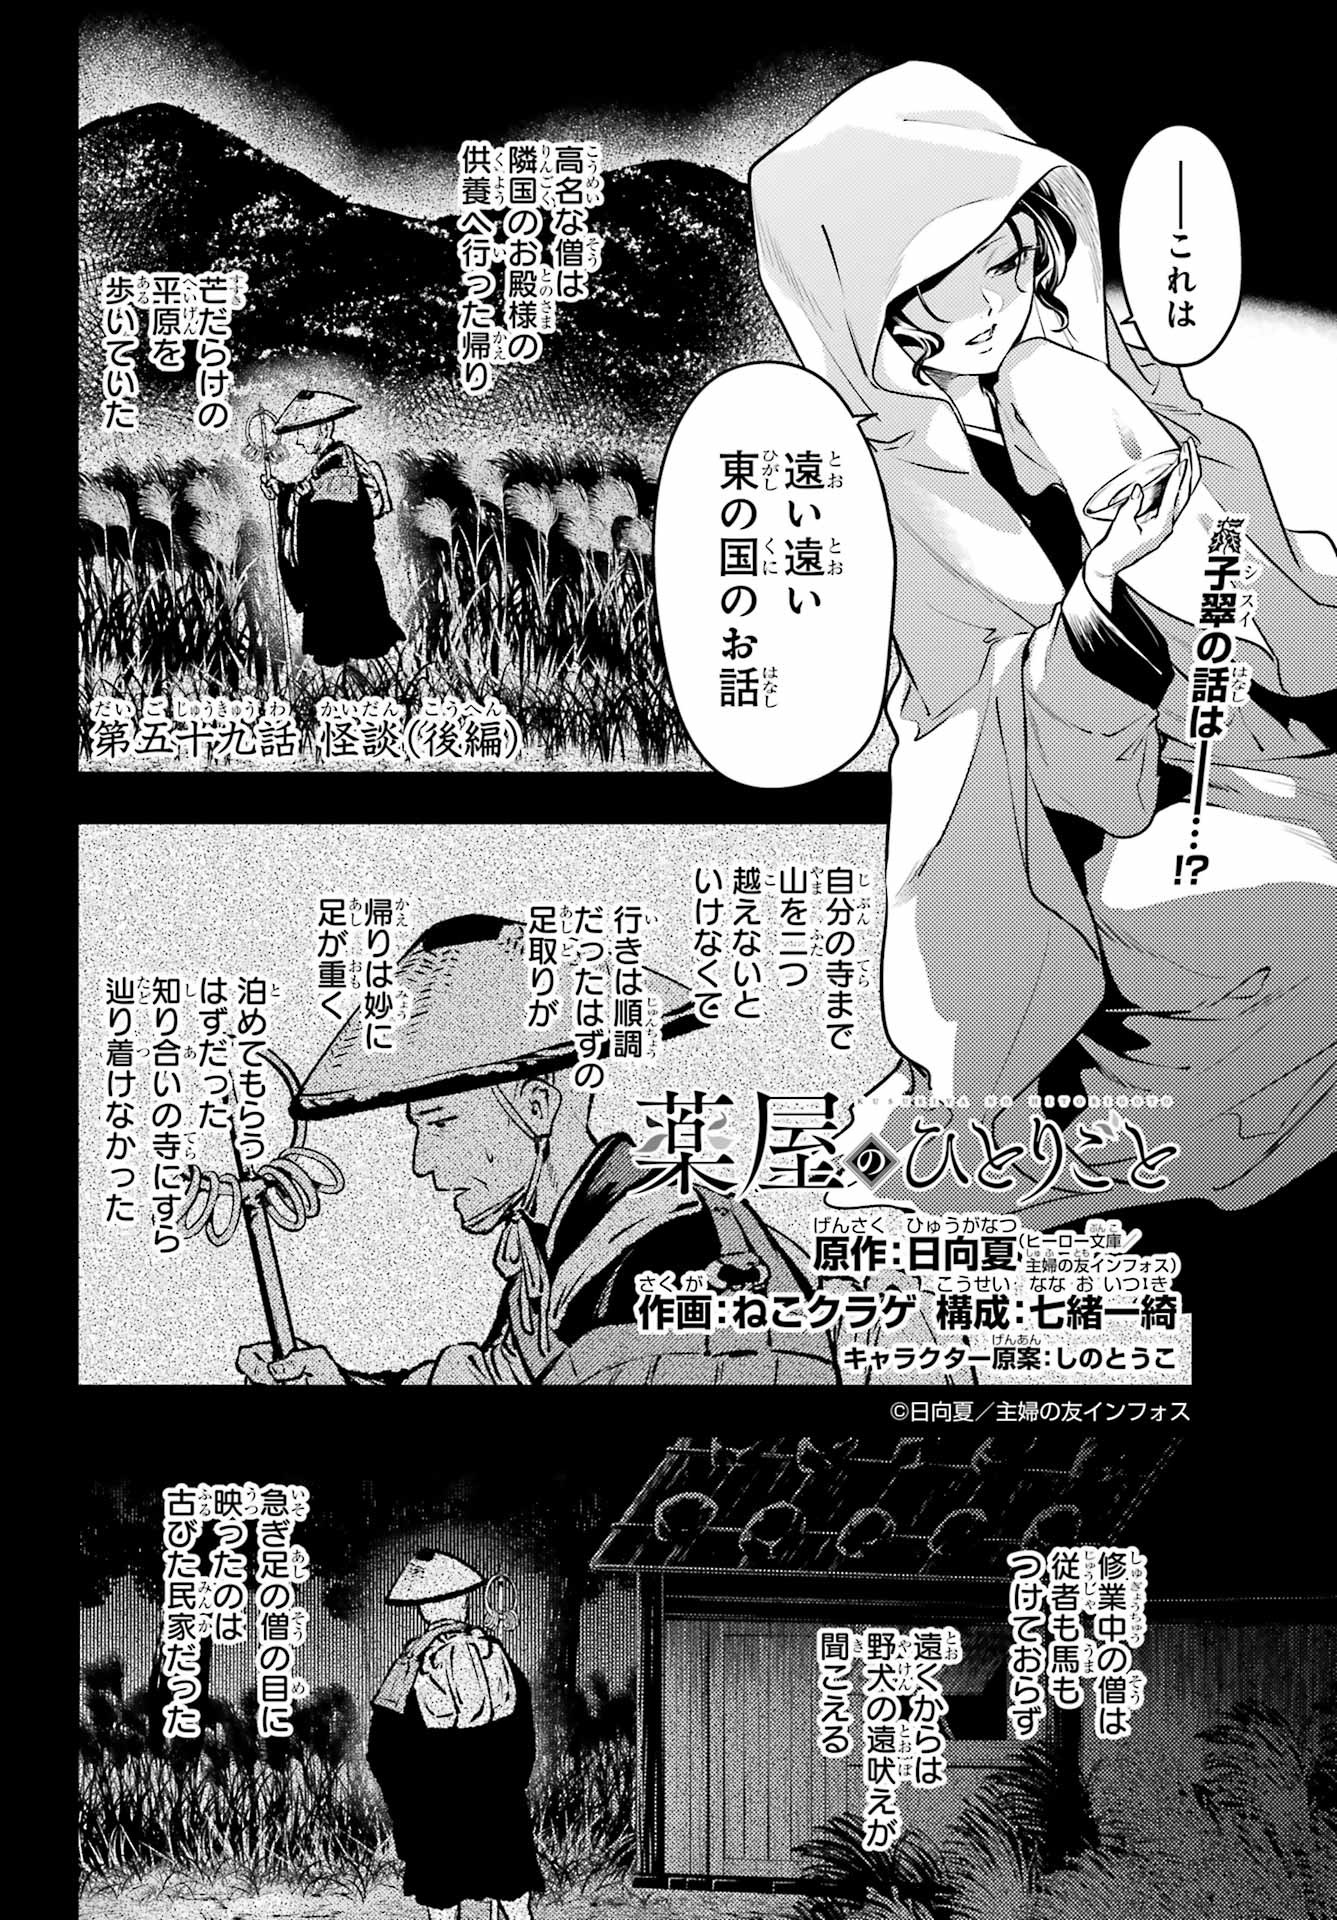 Kusuriya no Hitorigoto - Chapter 59-2 - Page 1